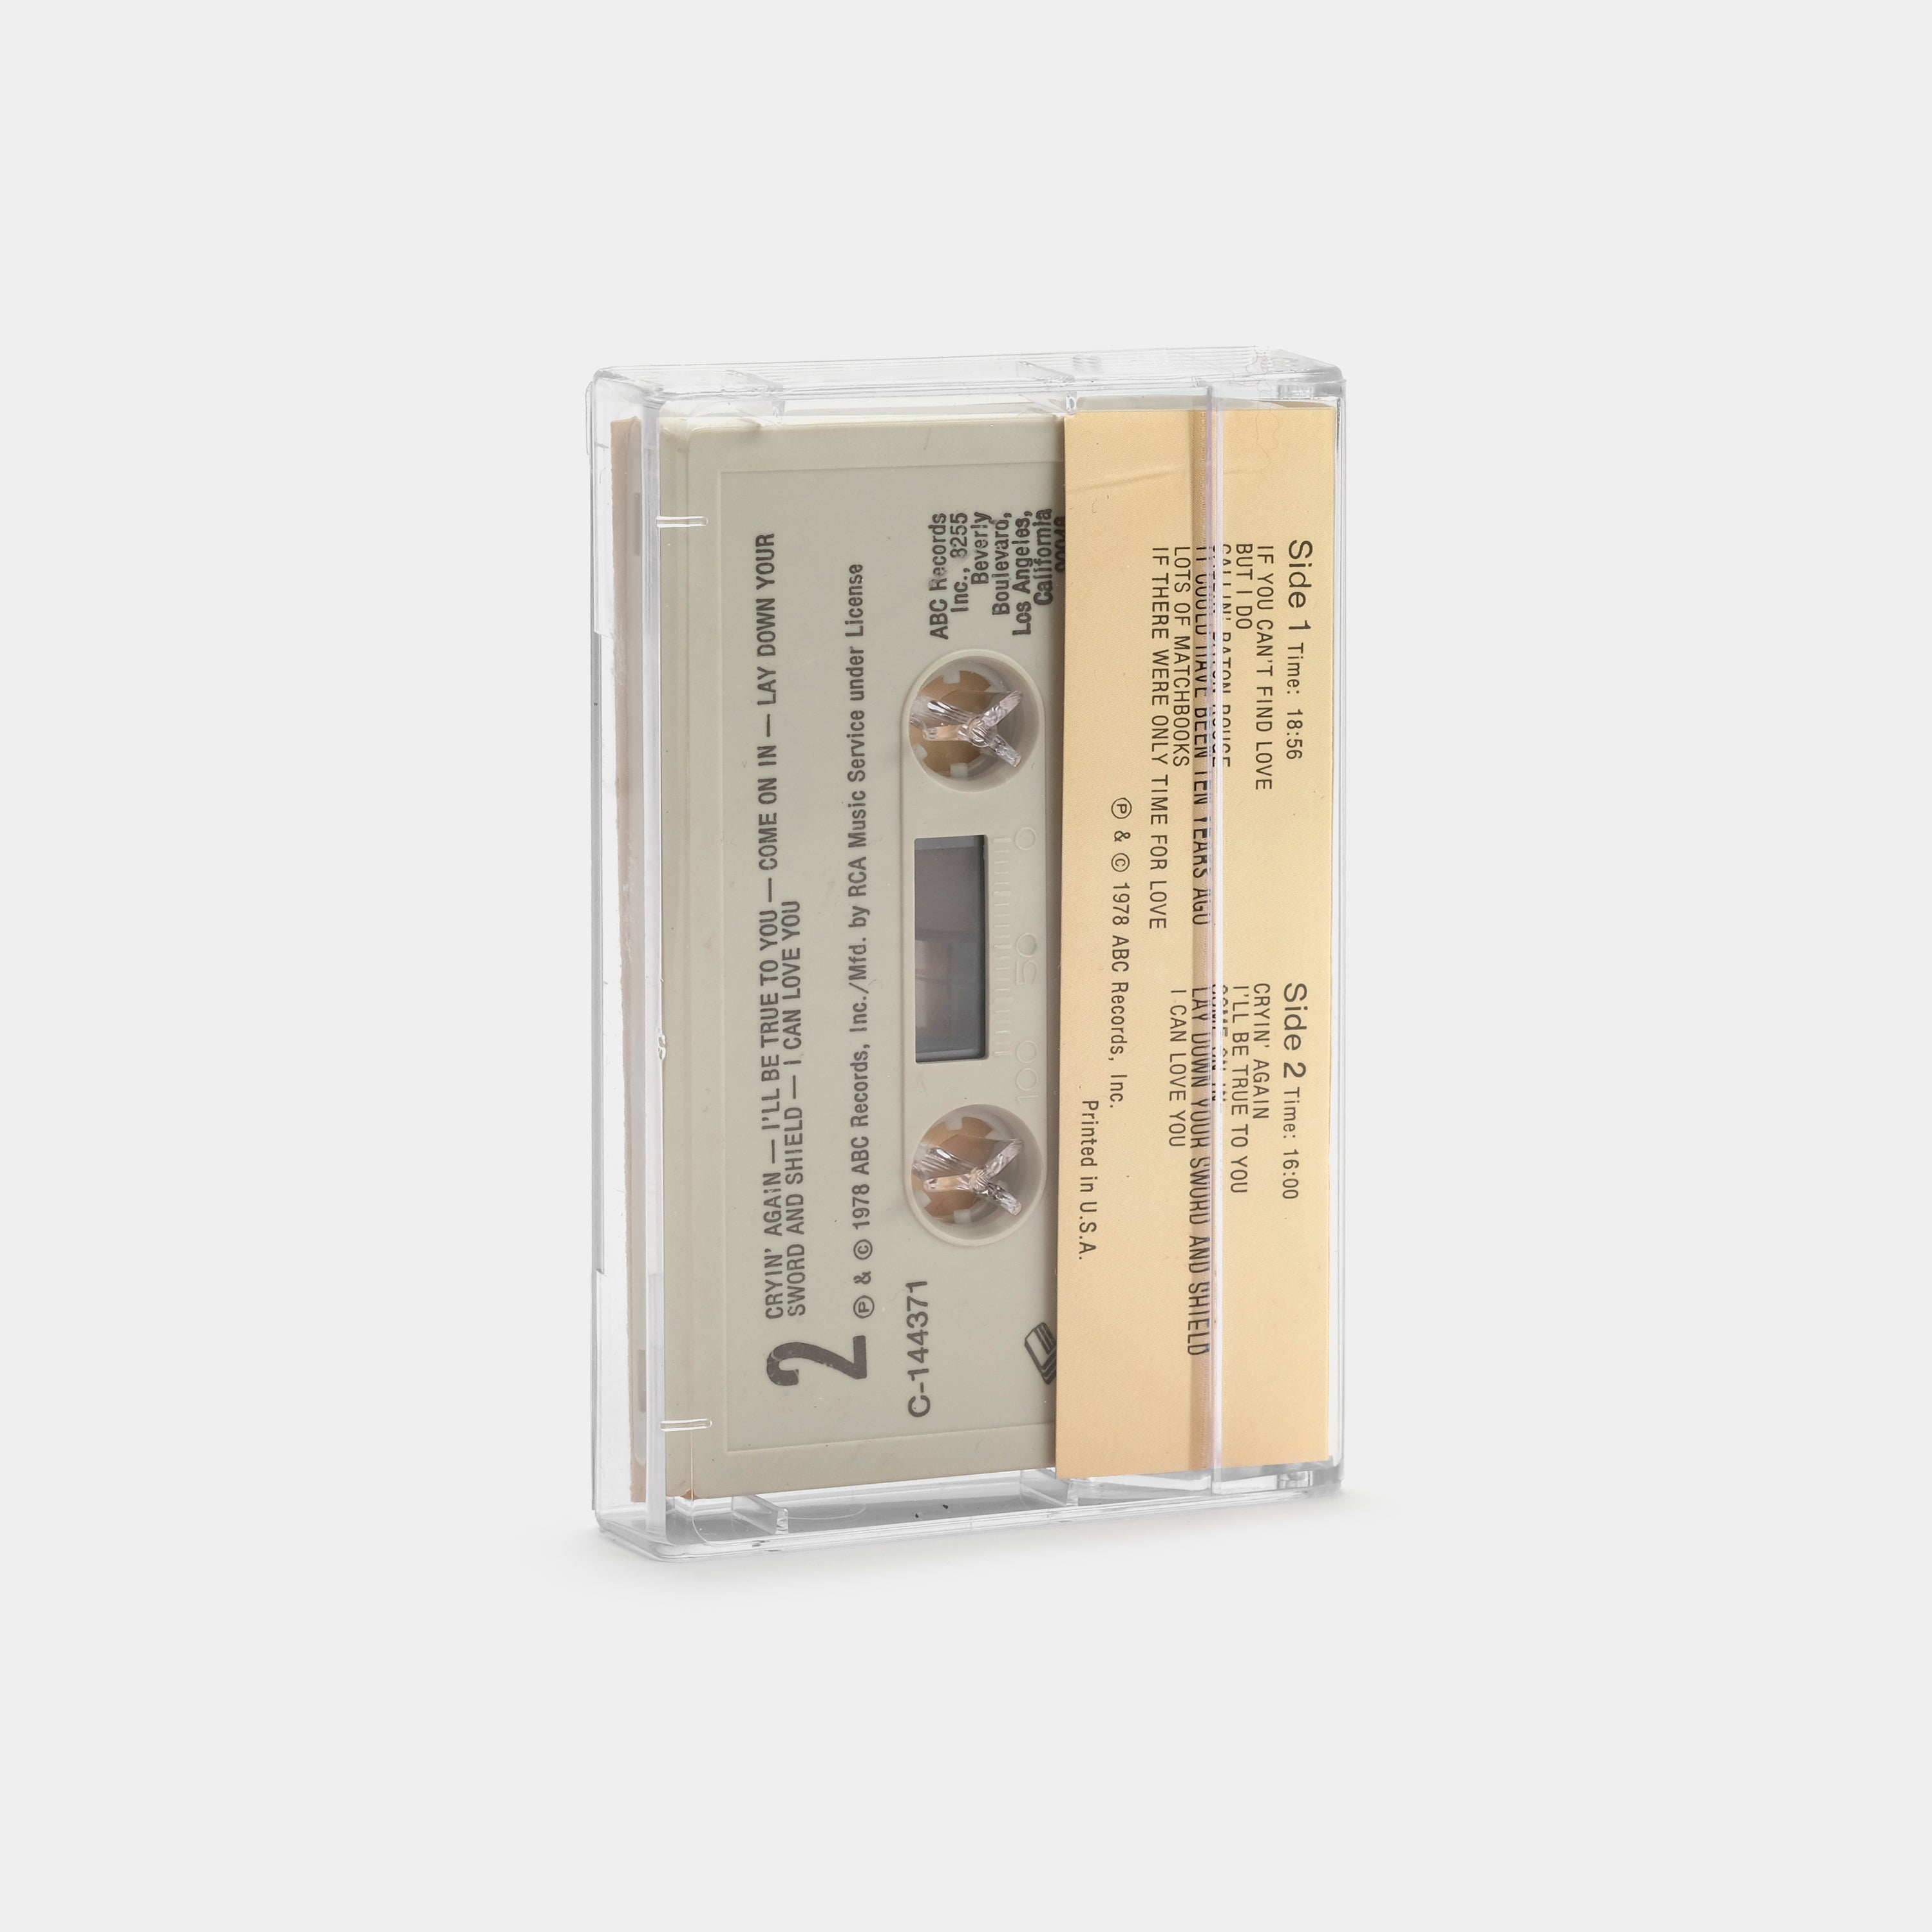 The Oak Ridge Boys - Room Service Cassette Tape